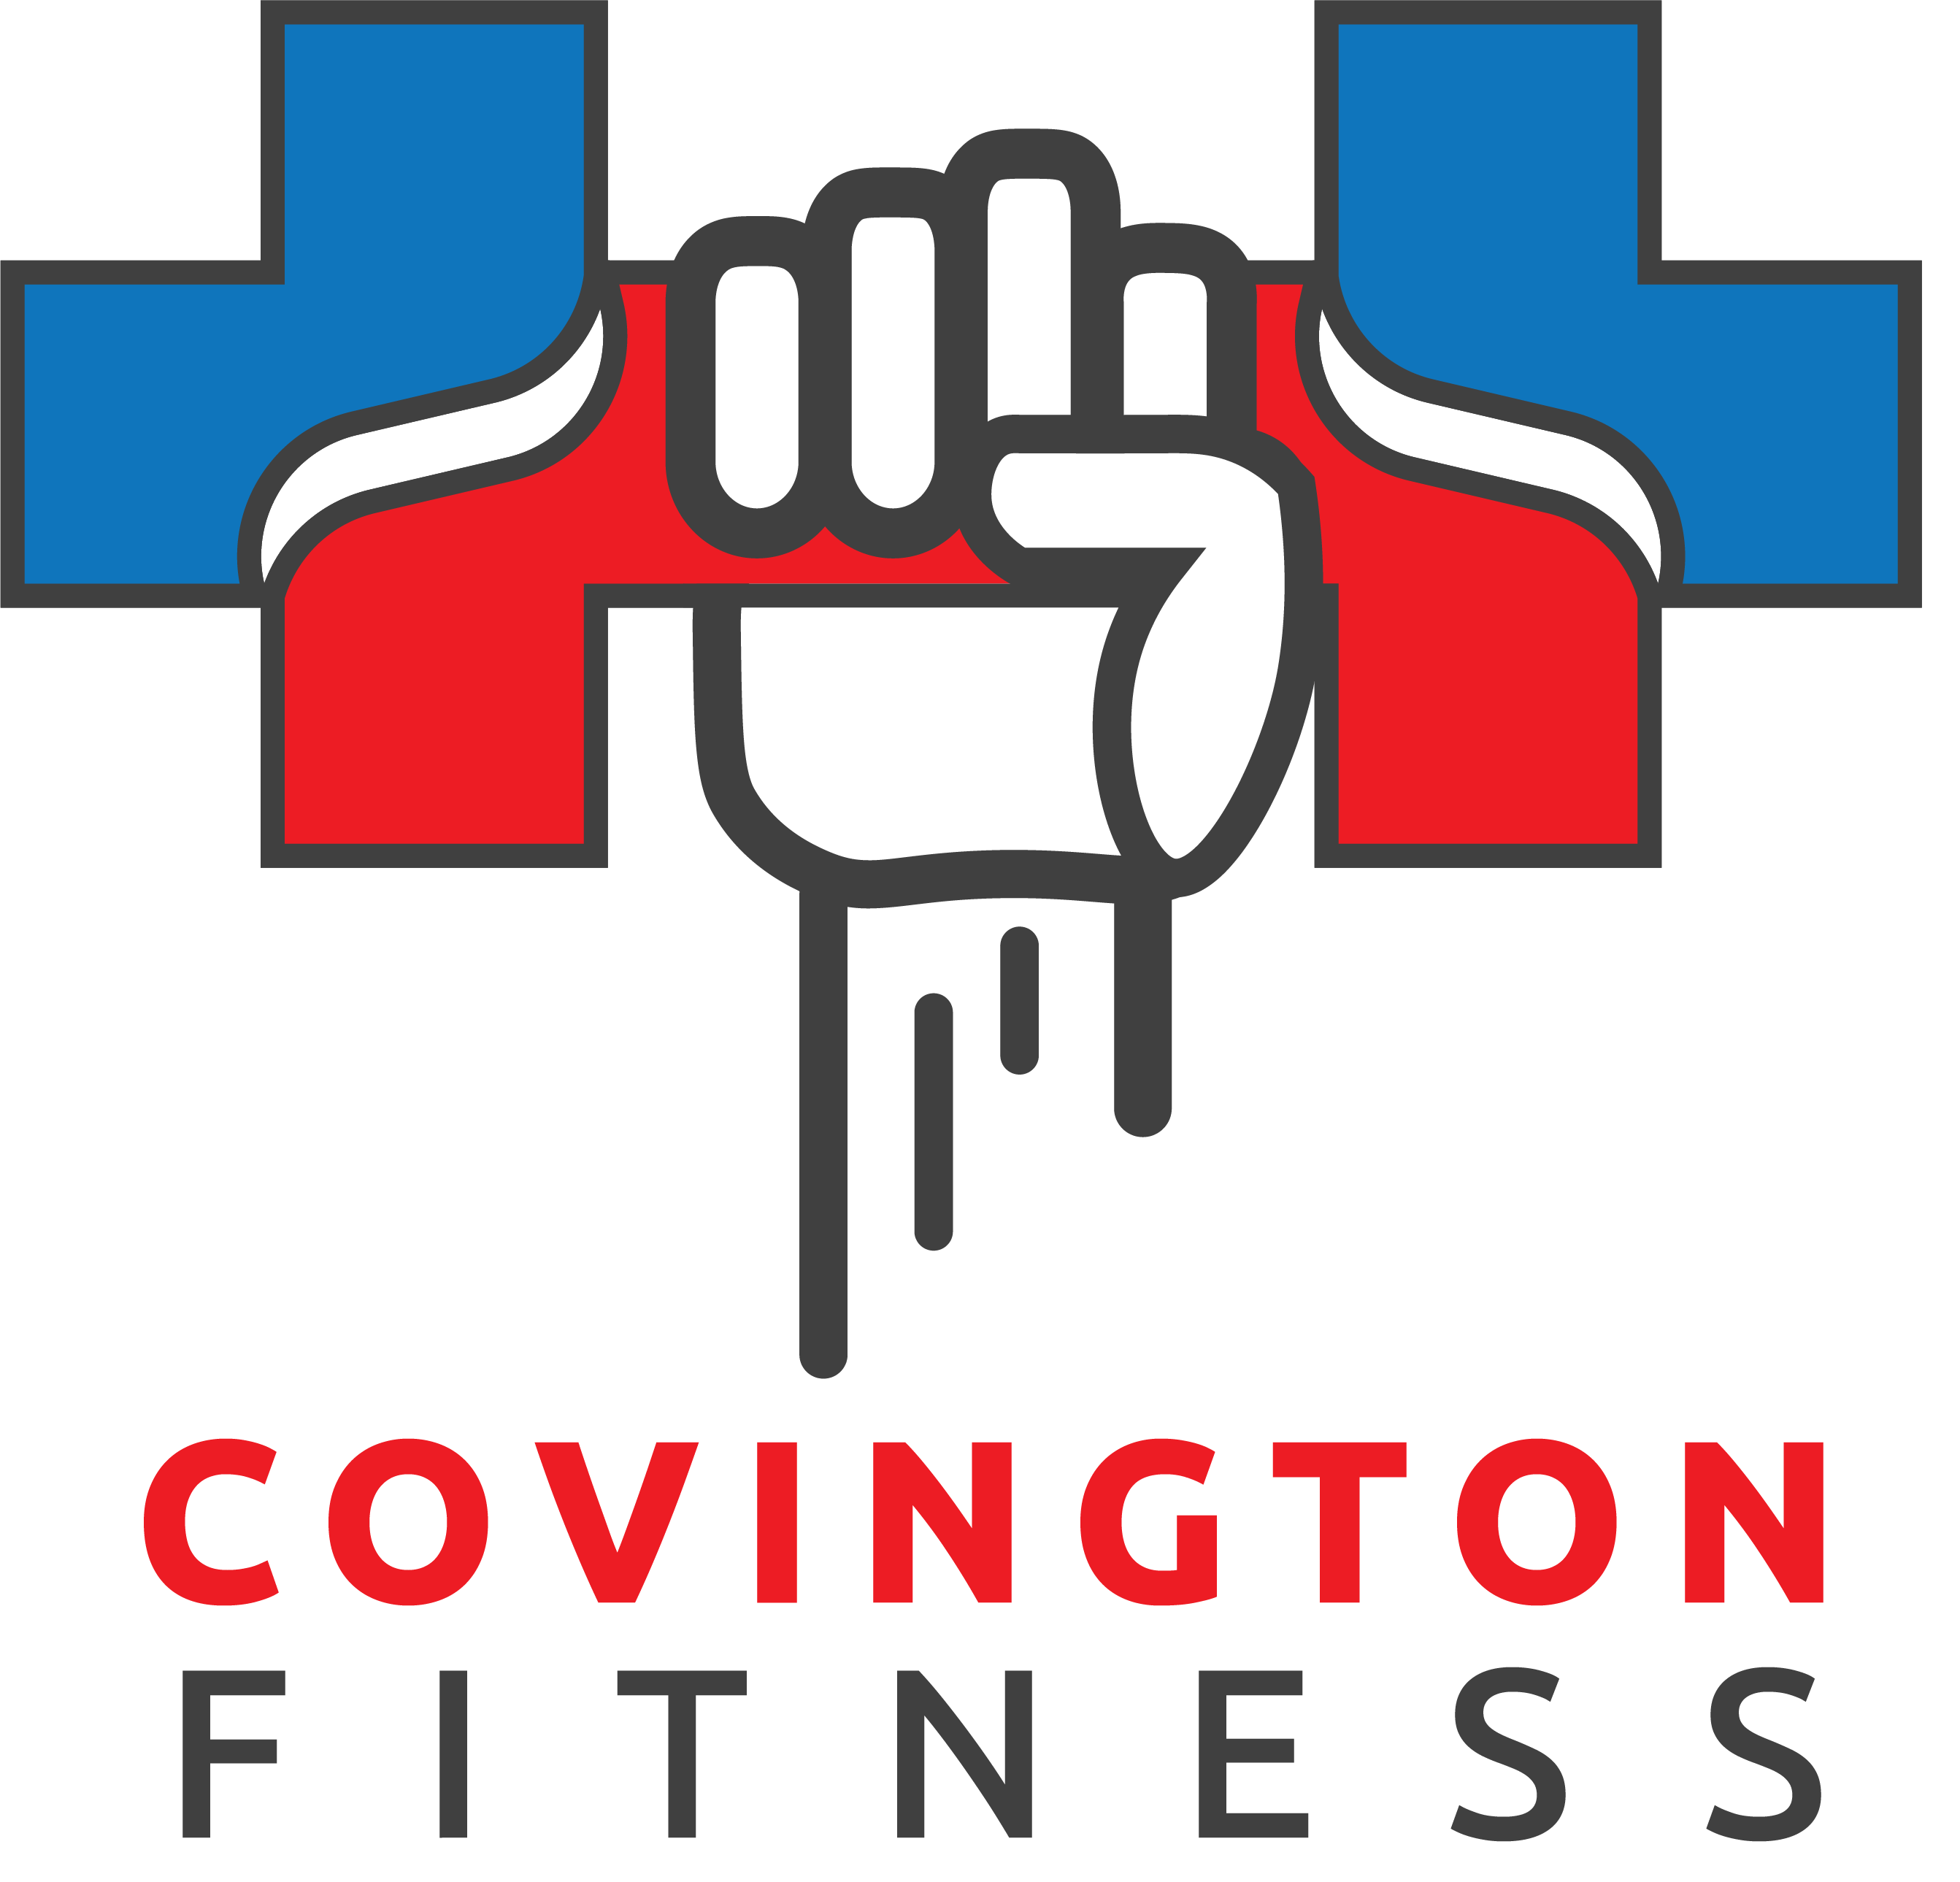 Covington Fitness